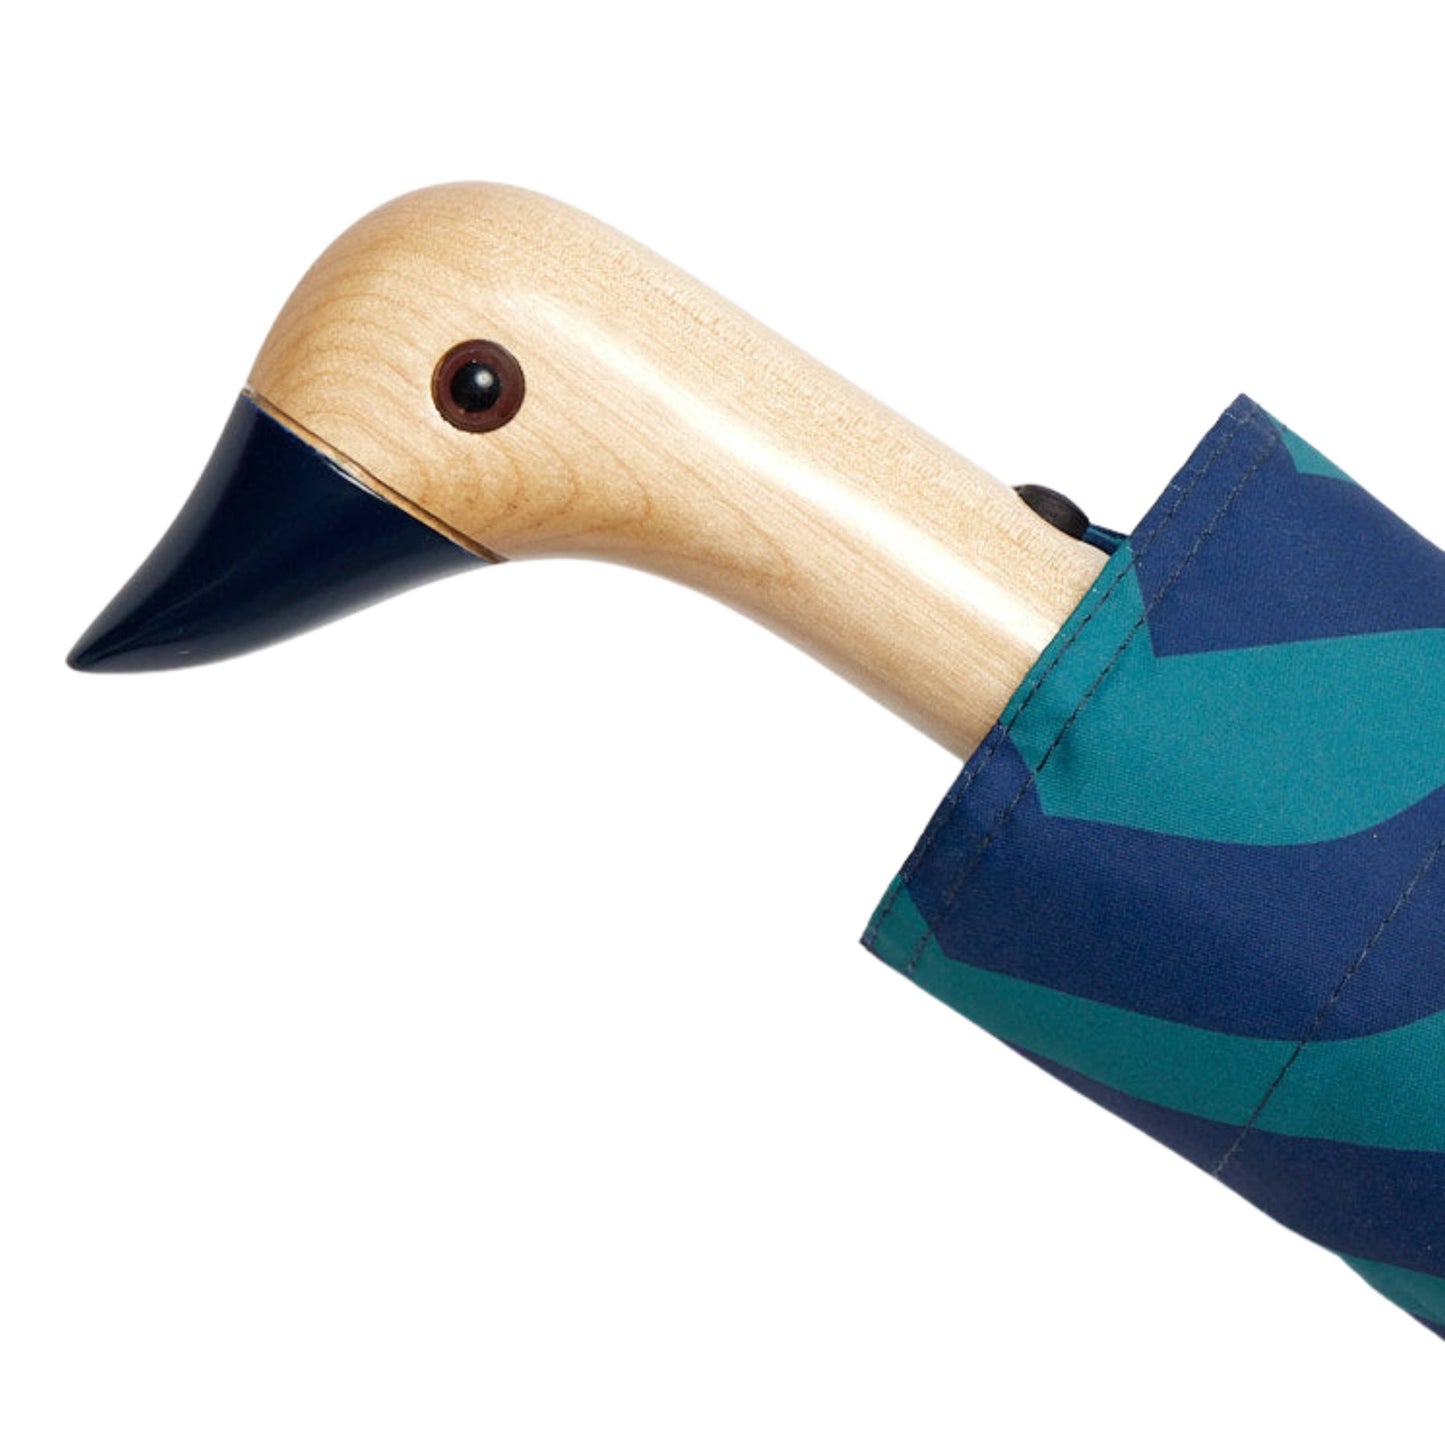 Original Duckhead - Blue Swirl Compact Eco-Friendly Wind Resistant Umbrella